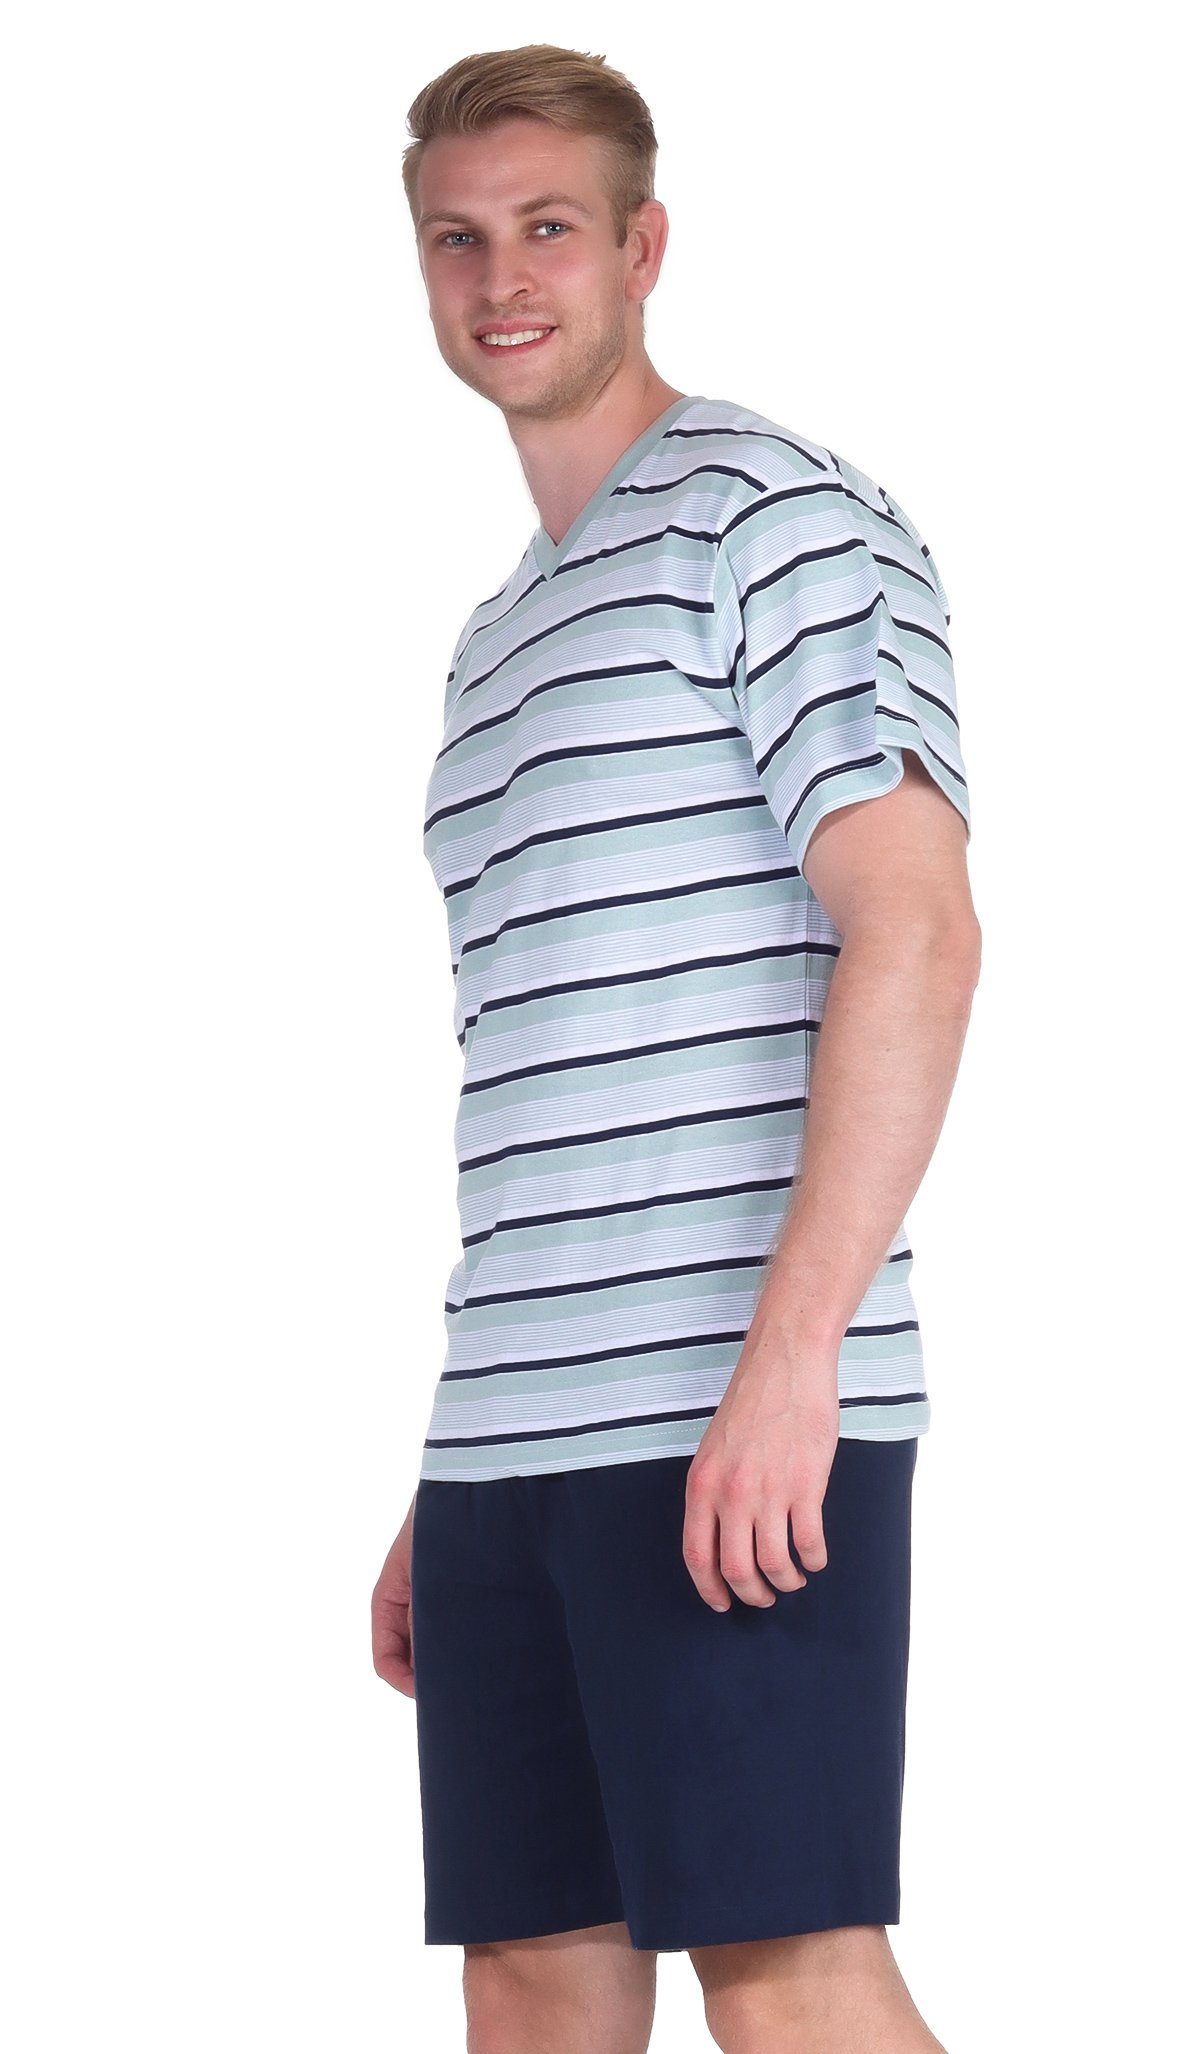 Moonline Shorty 100% Aqua Herren Schlafanzug V-Ausschnitt Shorty mit Single-Jersey Baumwolle Kurzarm